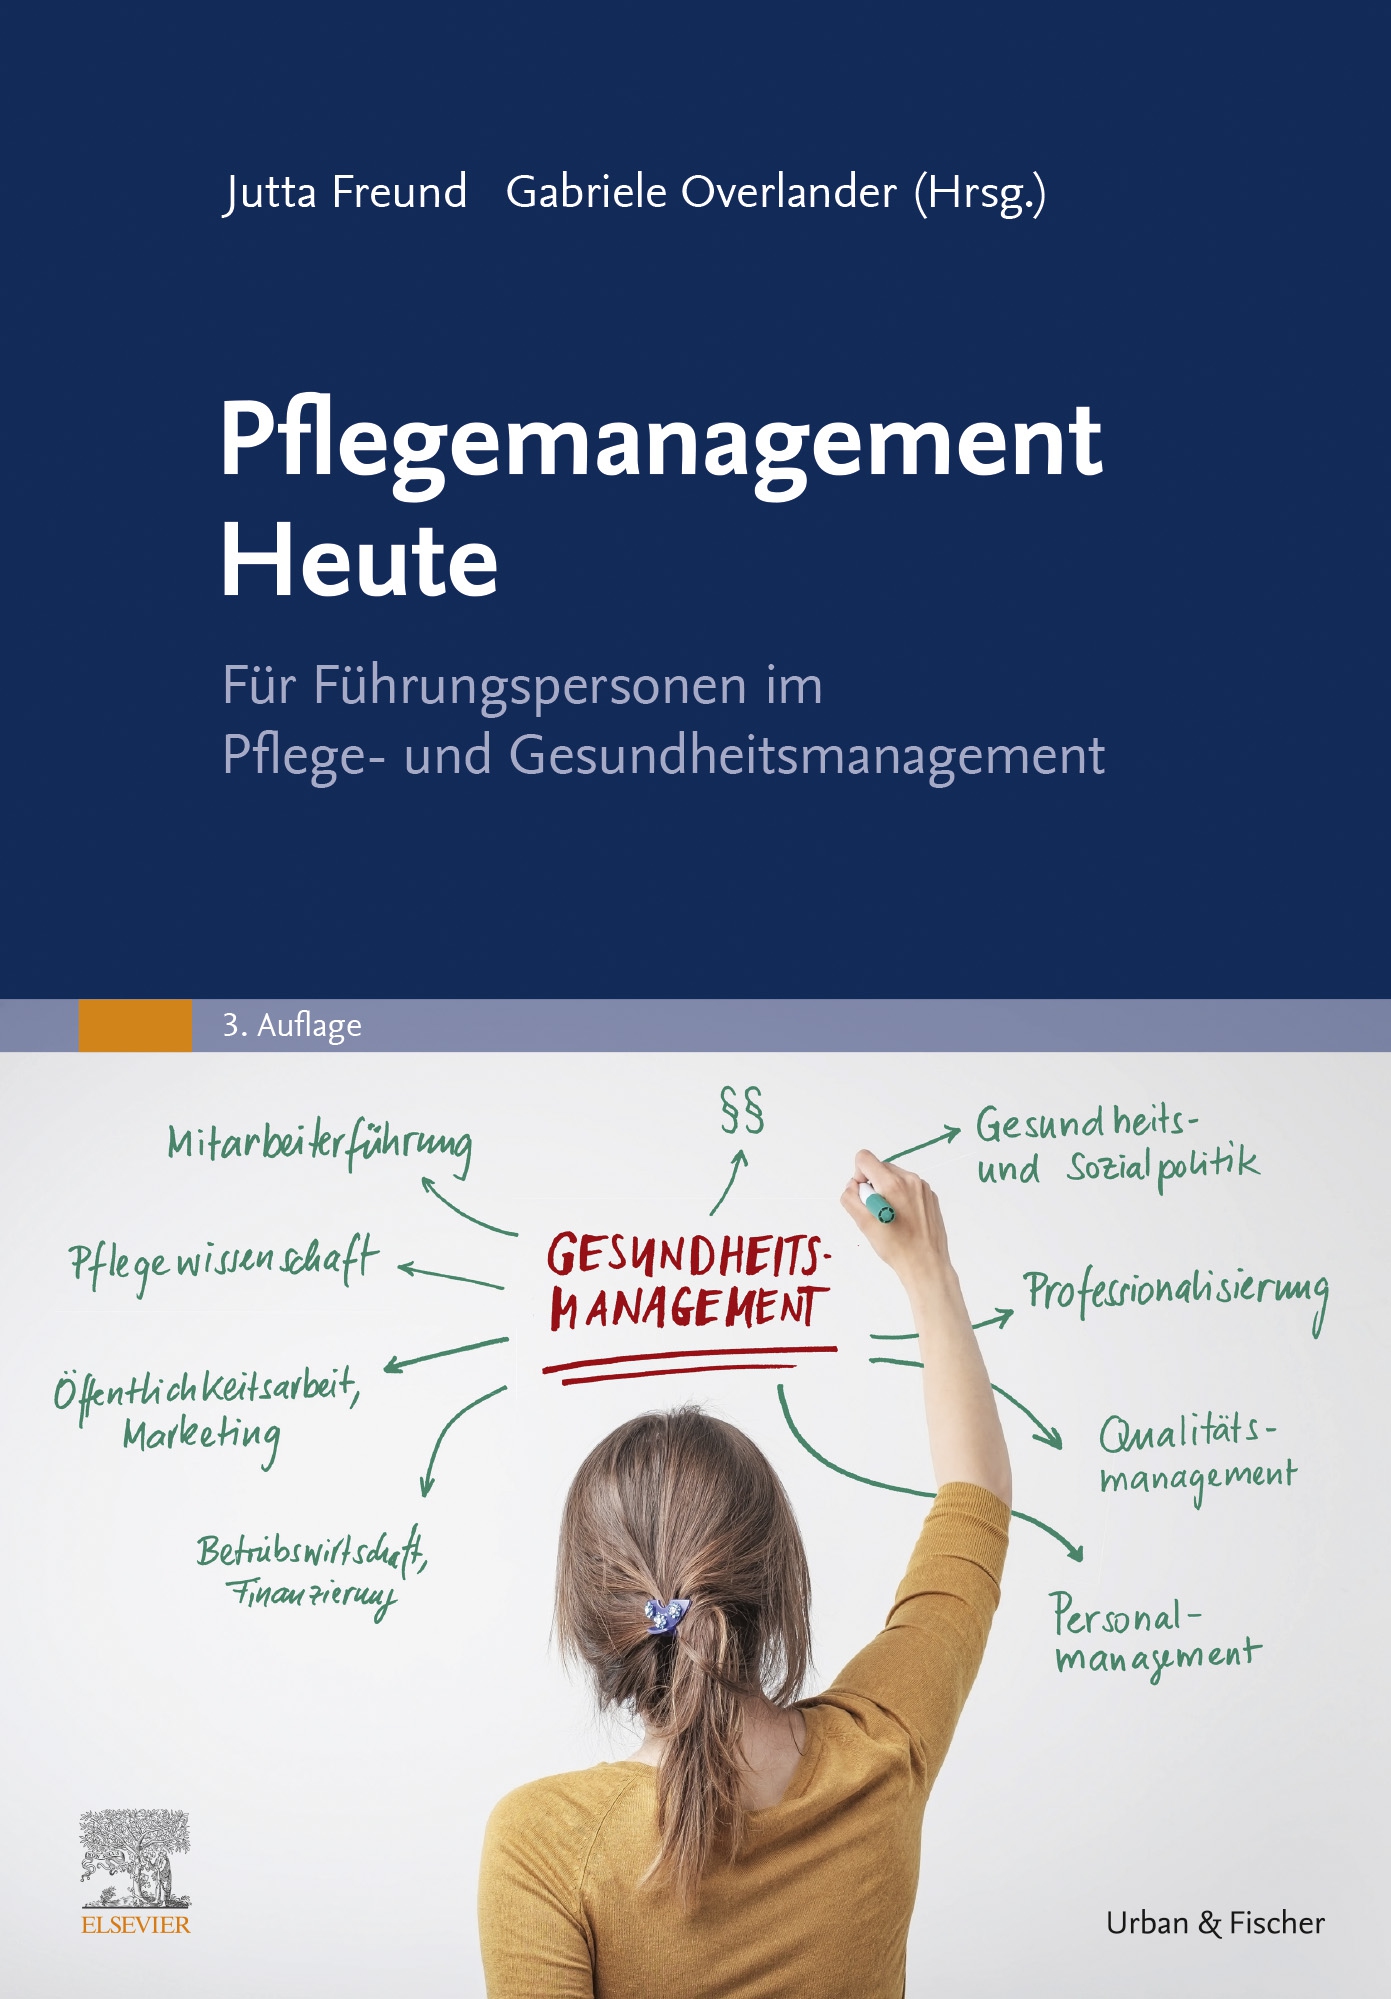 master thesis pflegemanagement